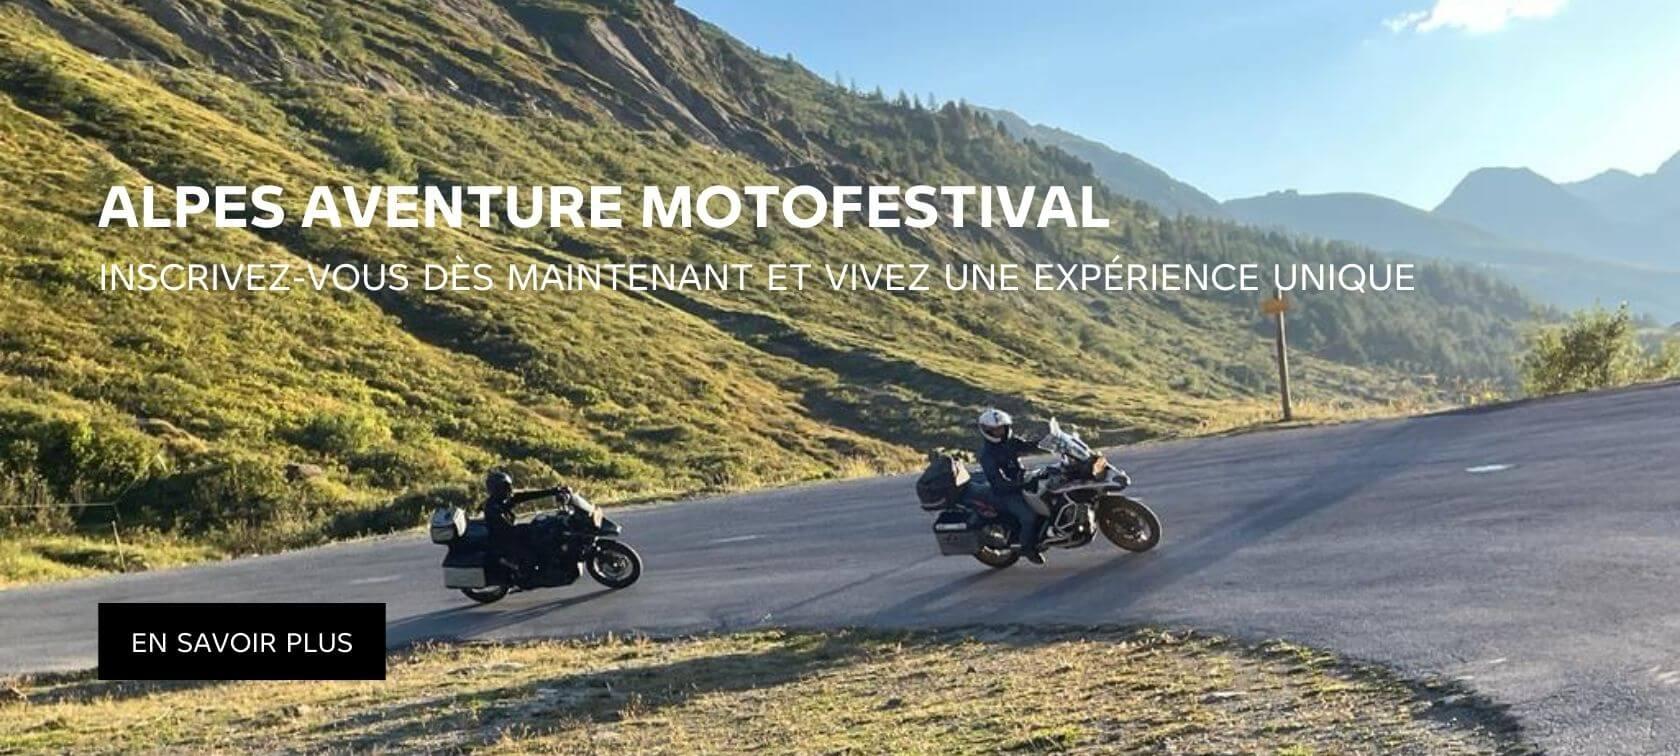 Alpes Aventure Motofestival